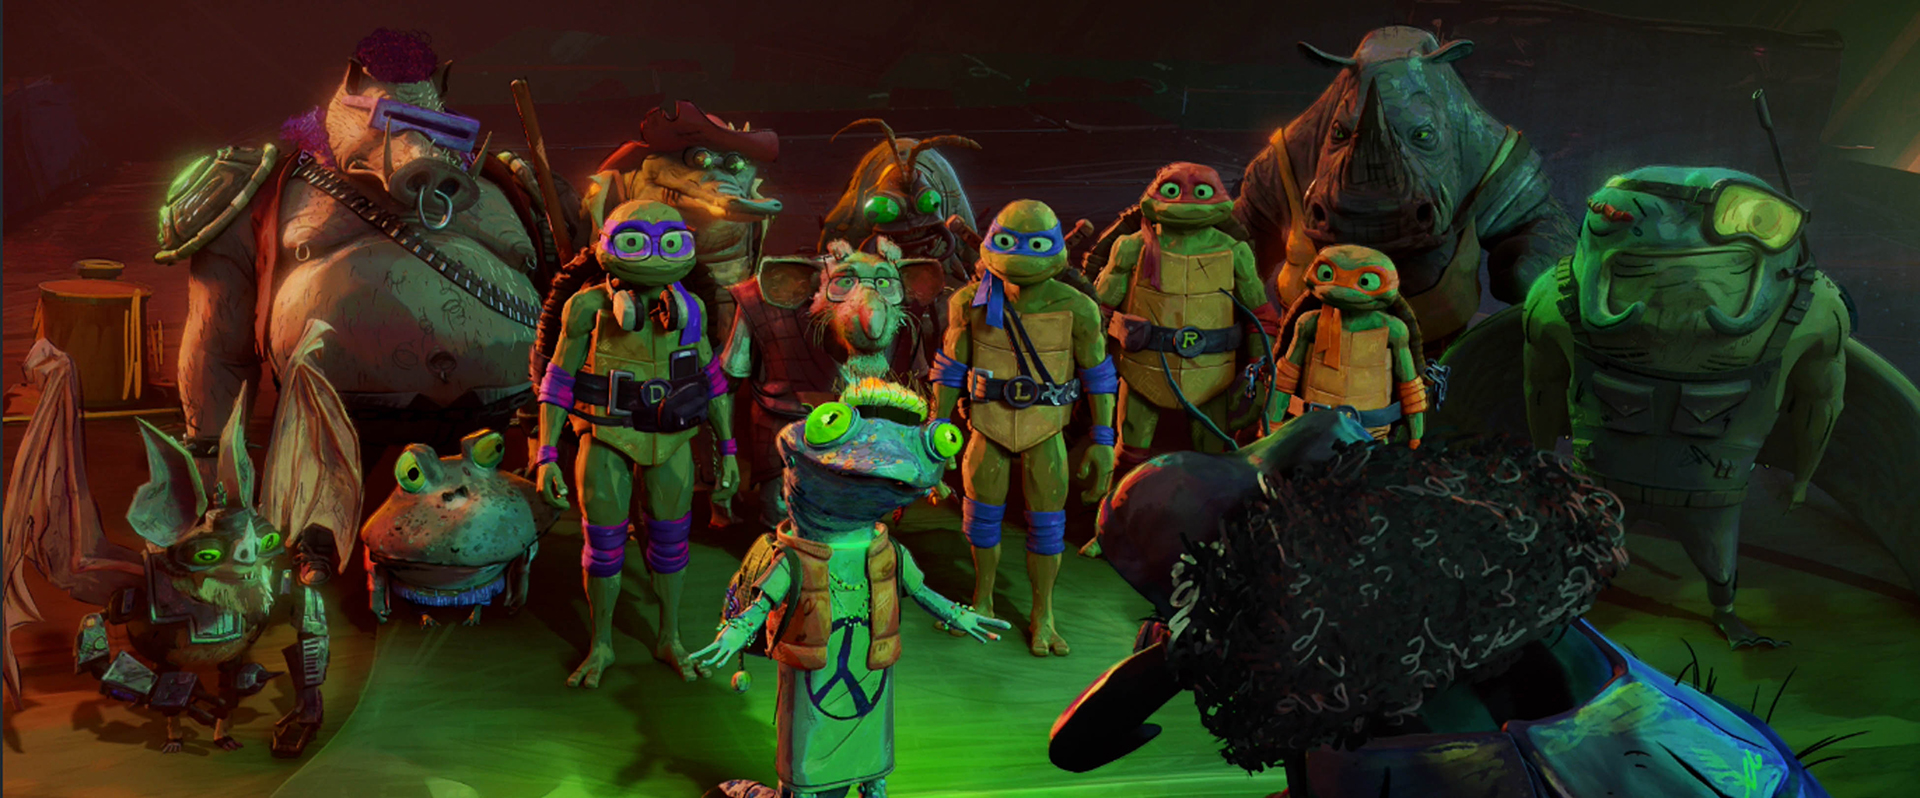 Teenage mutant ninja turtles splintered fate. Черепашки-ниндзя погром мутантов Эйприл. Мондо Гекко Ninja Turtles. Черепашки ниндзя погром мутантов шредер.